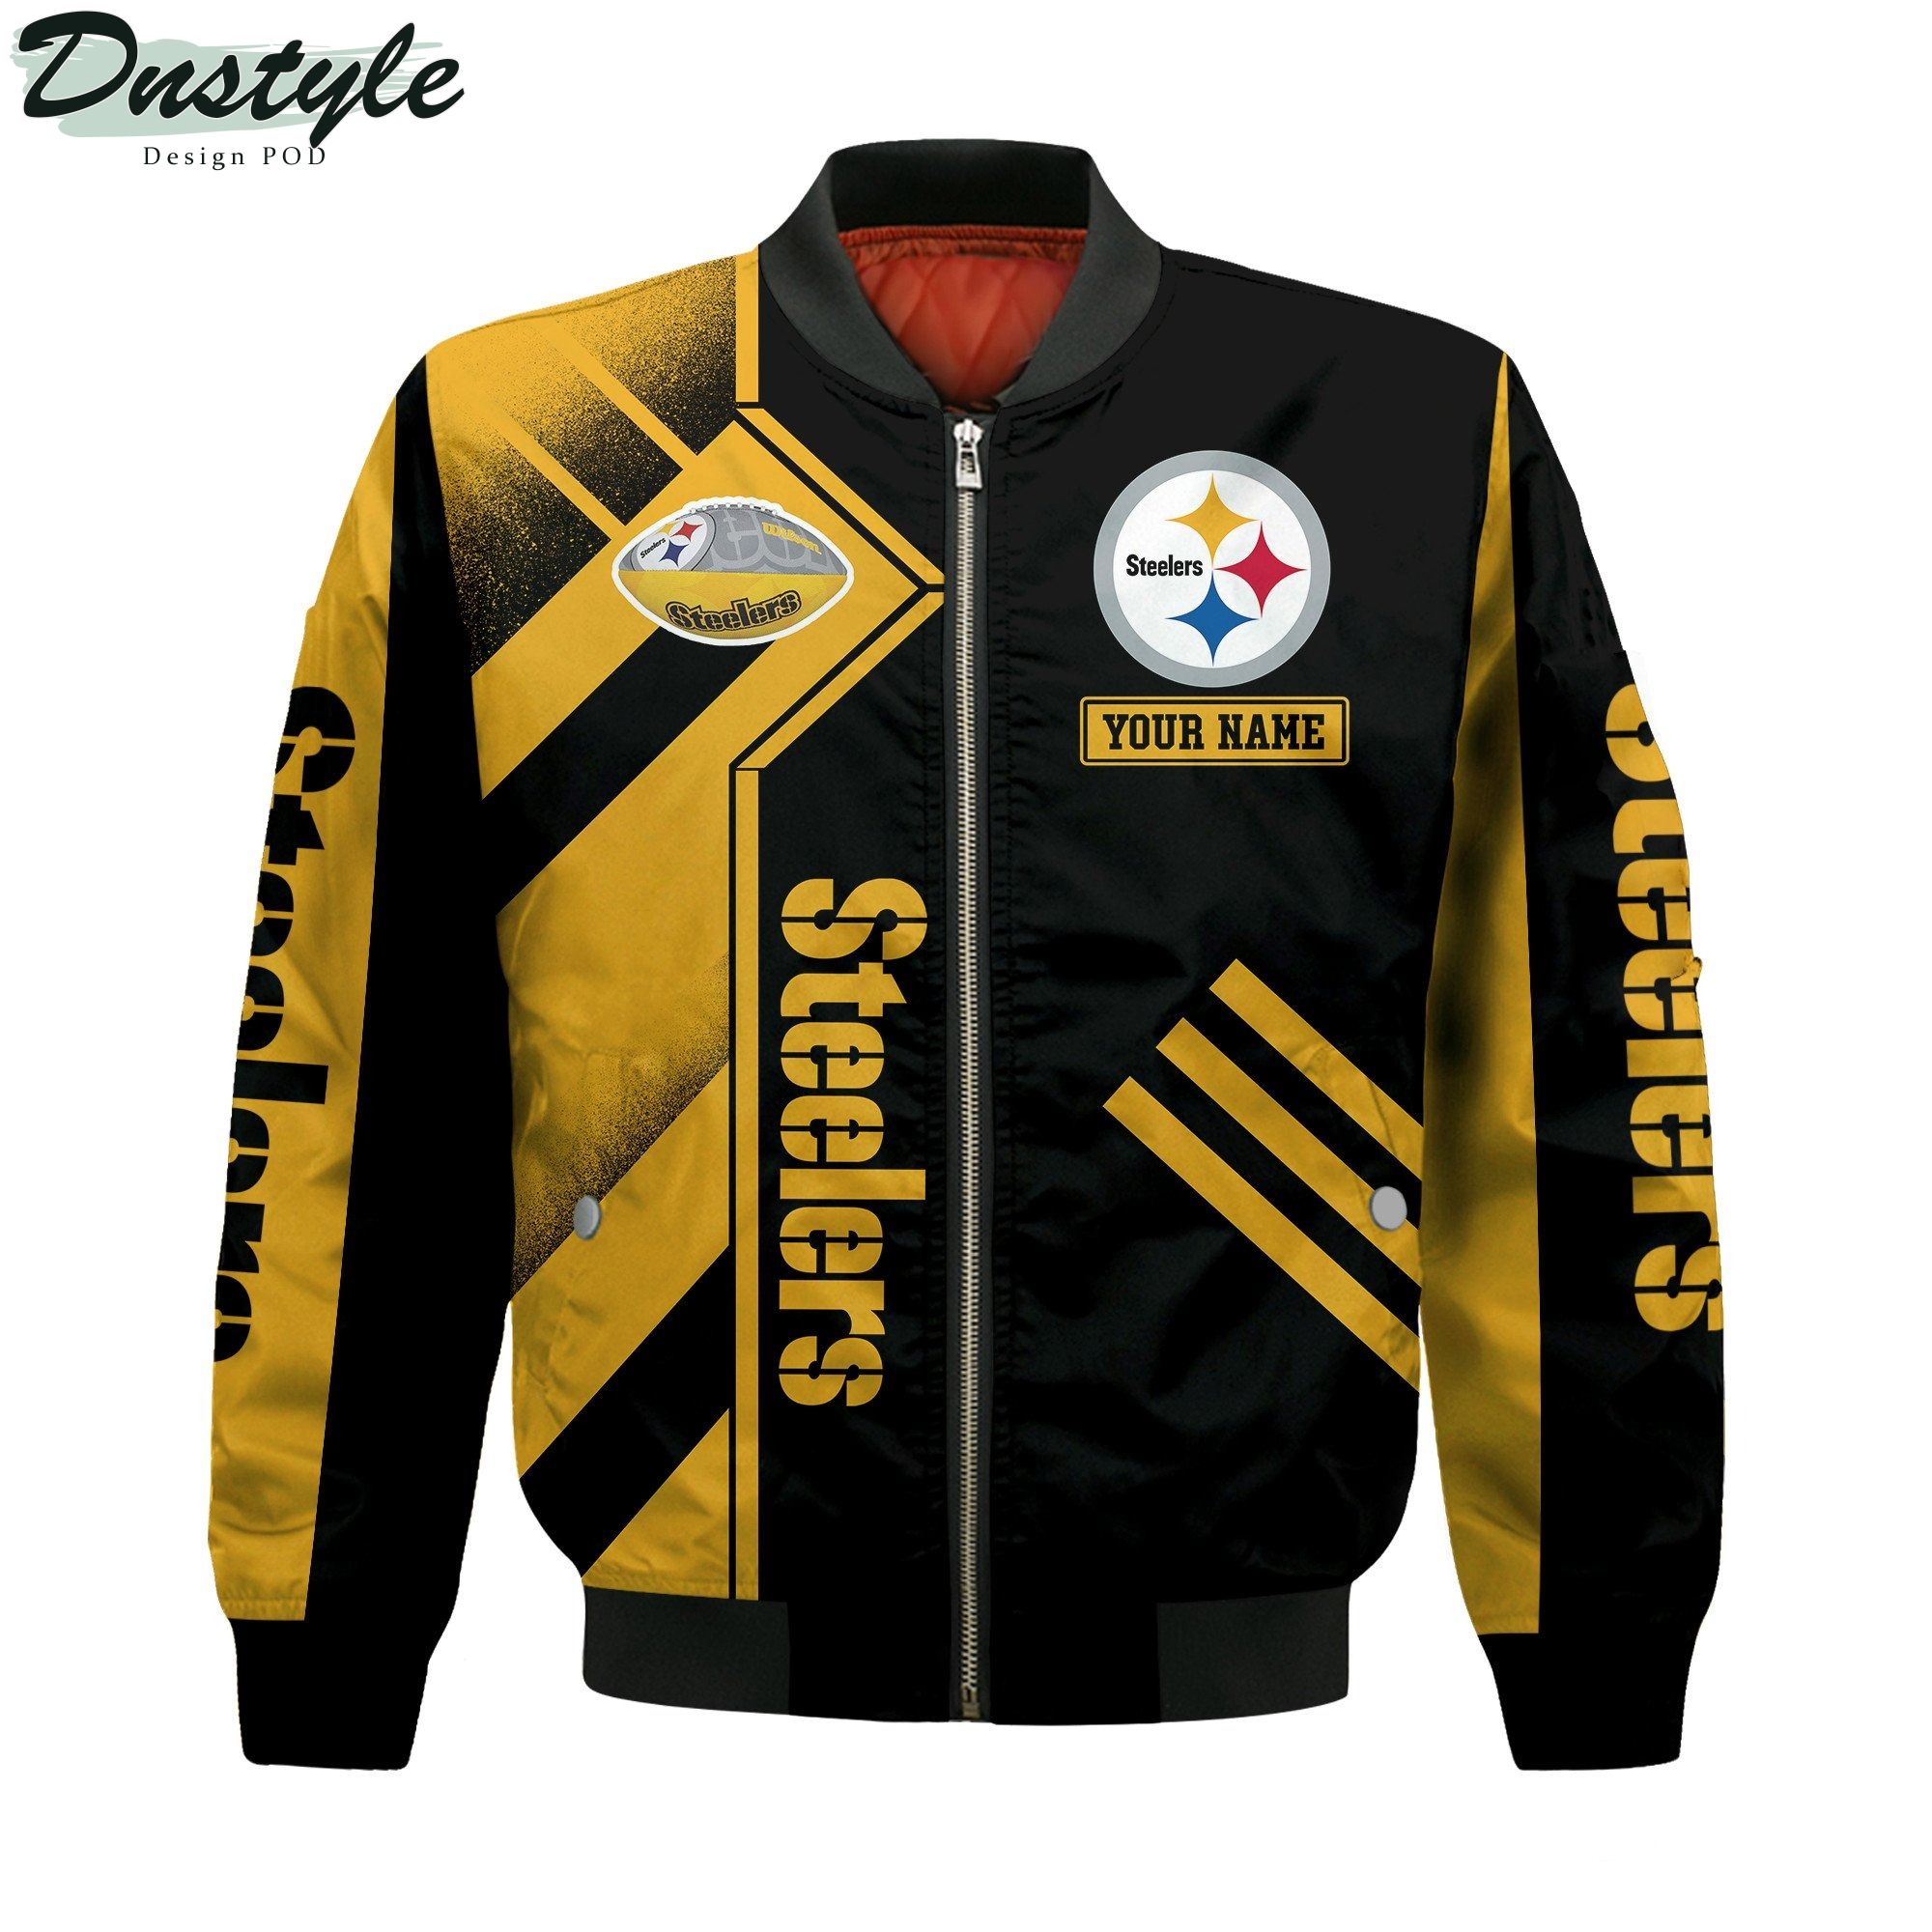 Pittsburgh Steelers NFL 6X Super Bowl Champions Custom Name Bomber Jacket